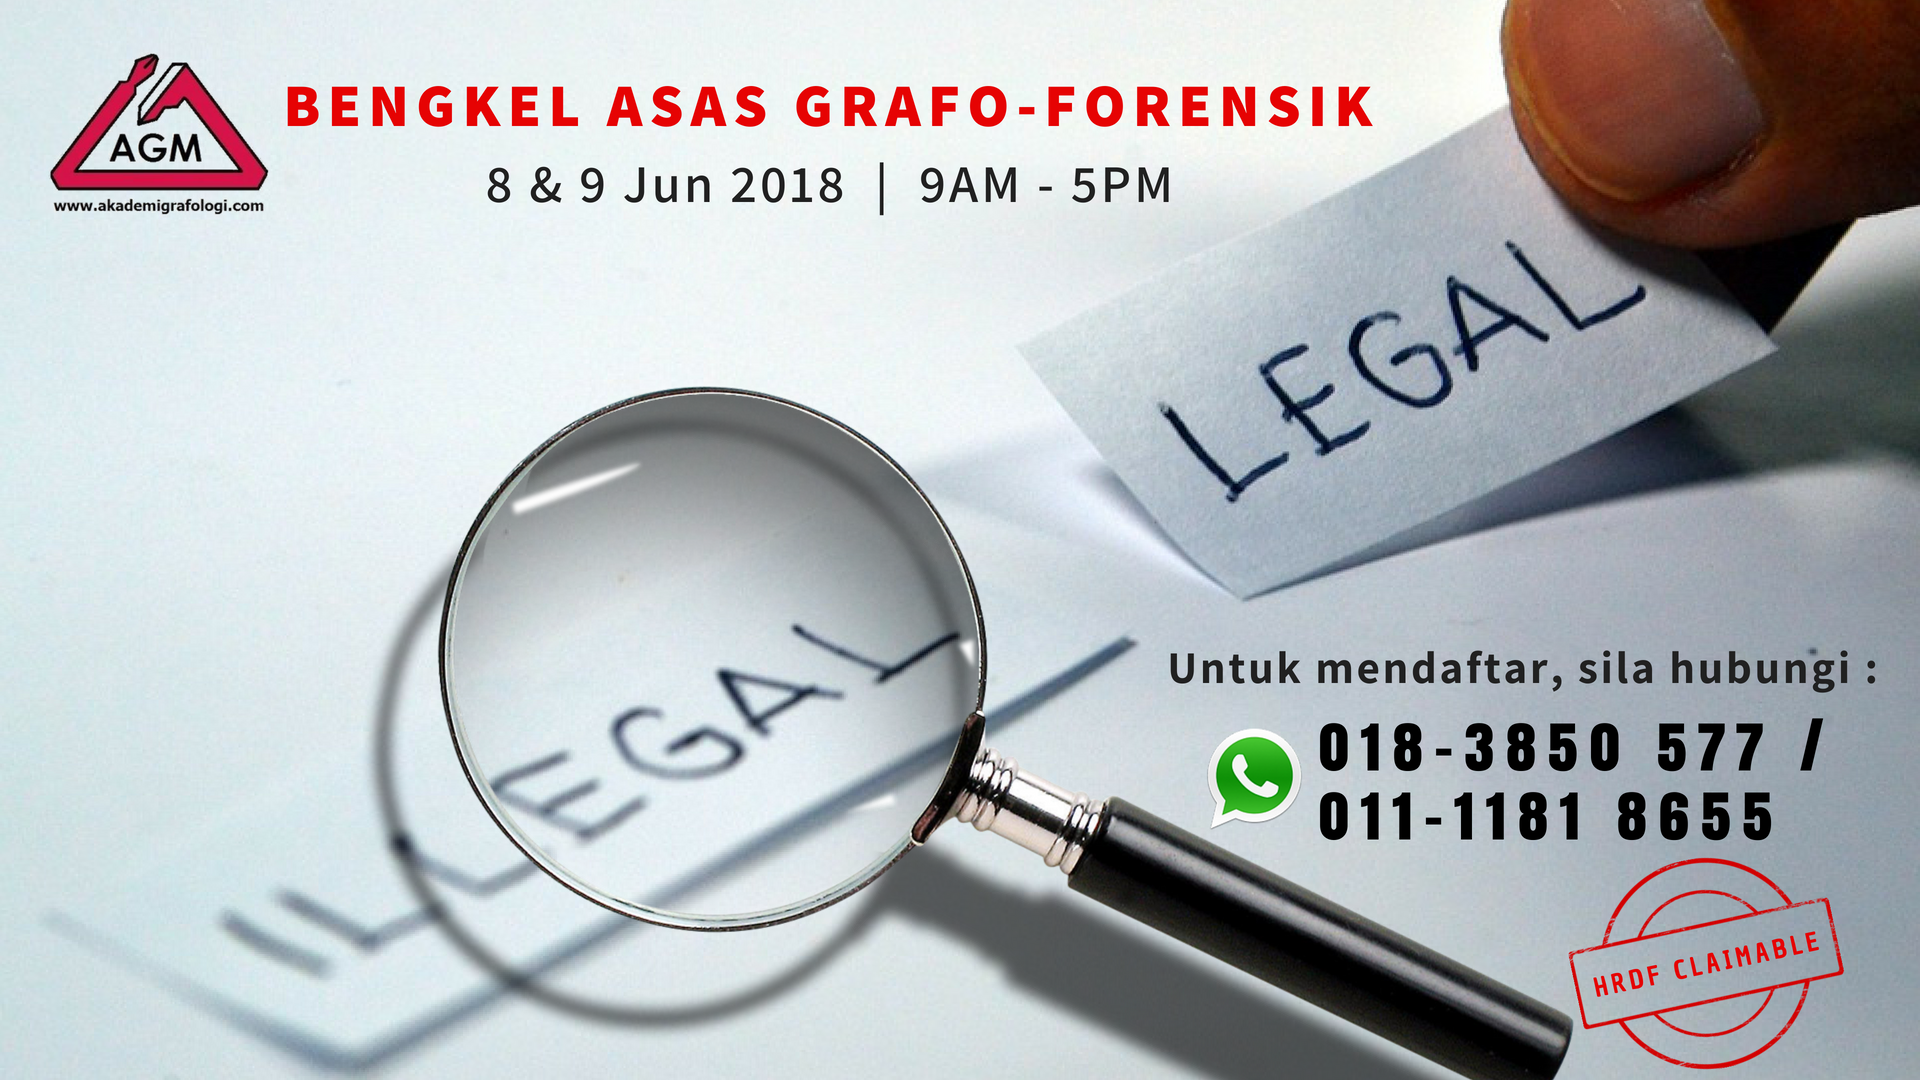 Bengkel Asas Grafo-Forensik (Jun 2018) 2